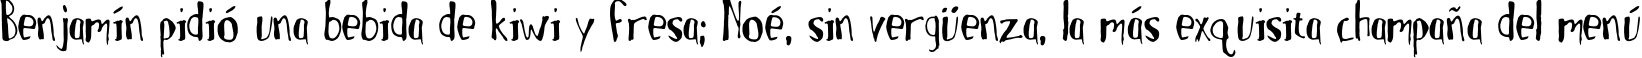 Пример написания шрифтом MotherGoose текста на испанском